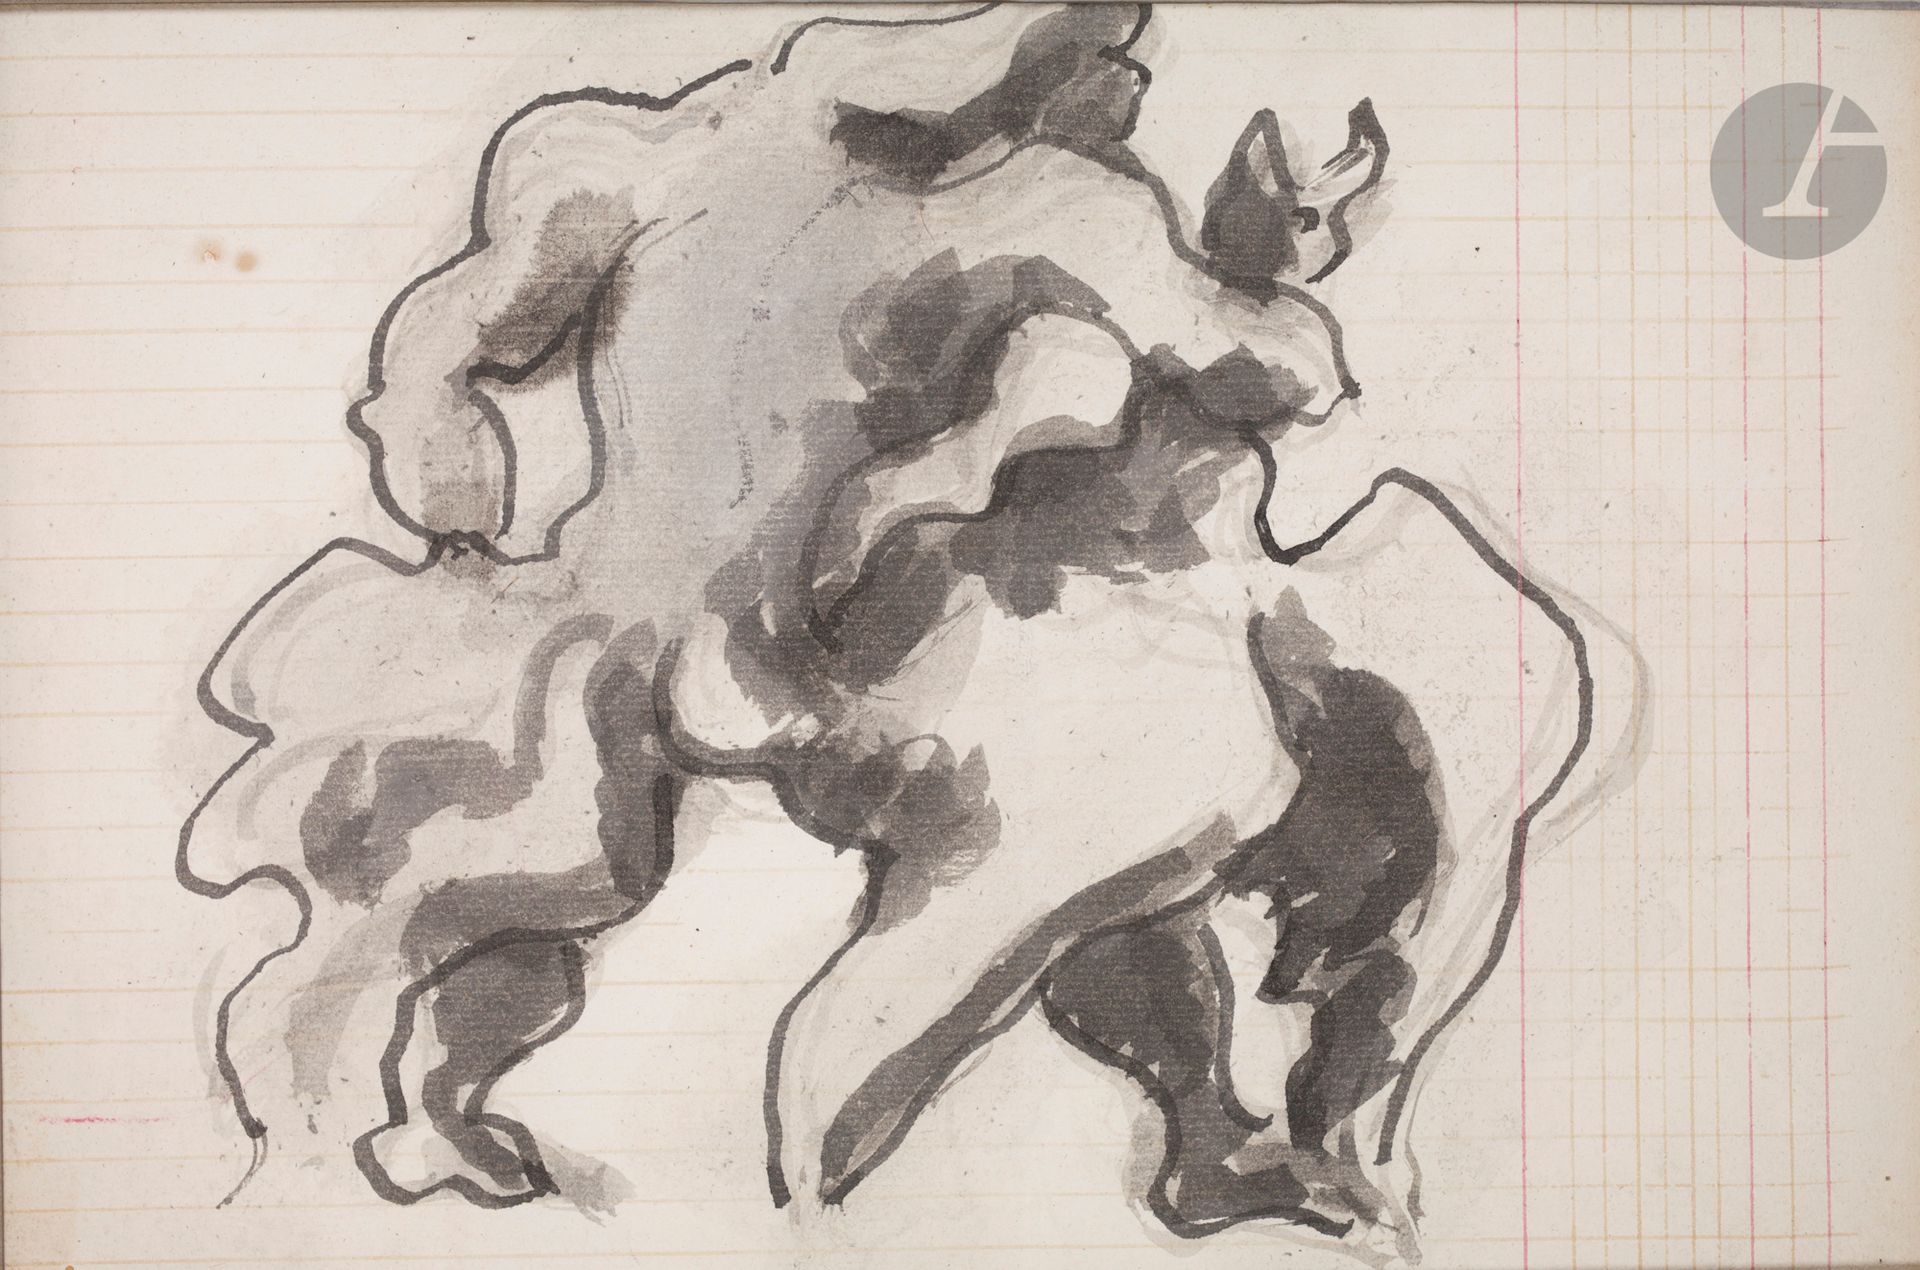 Null 雅克-利普奇兹 (1891-1973)
普罗米修斯击倒秃鹫，雕塑研究，约1935-36年
墨水和水墨。
无签名。
19 x 28.5 cm

出处: &hellip;